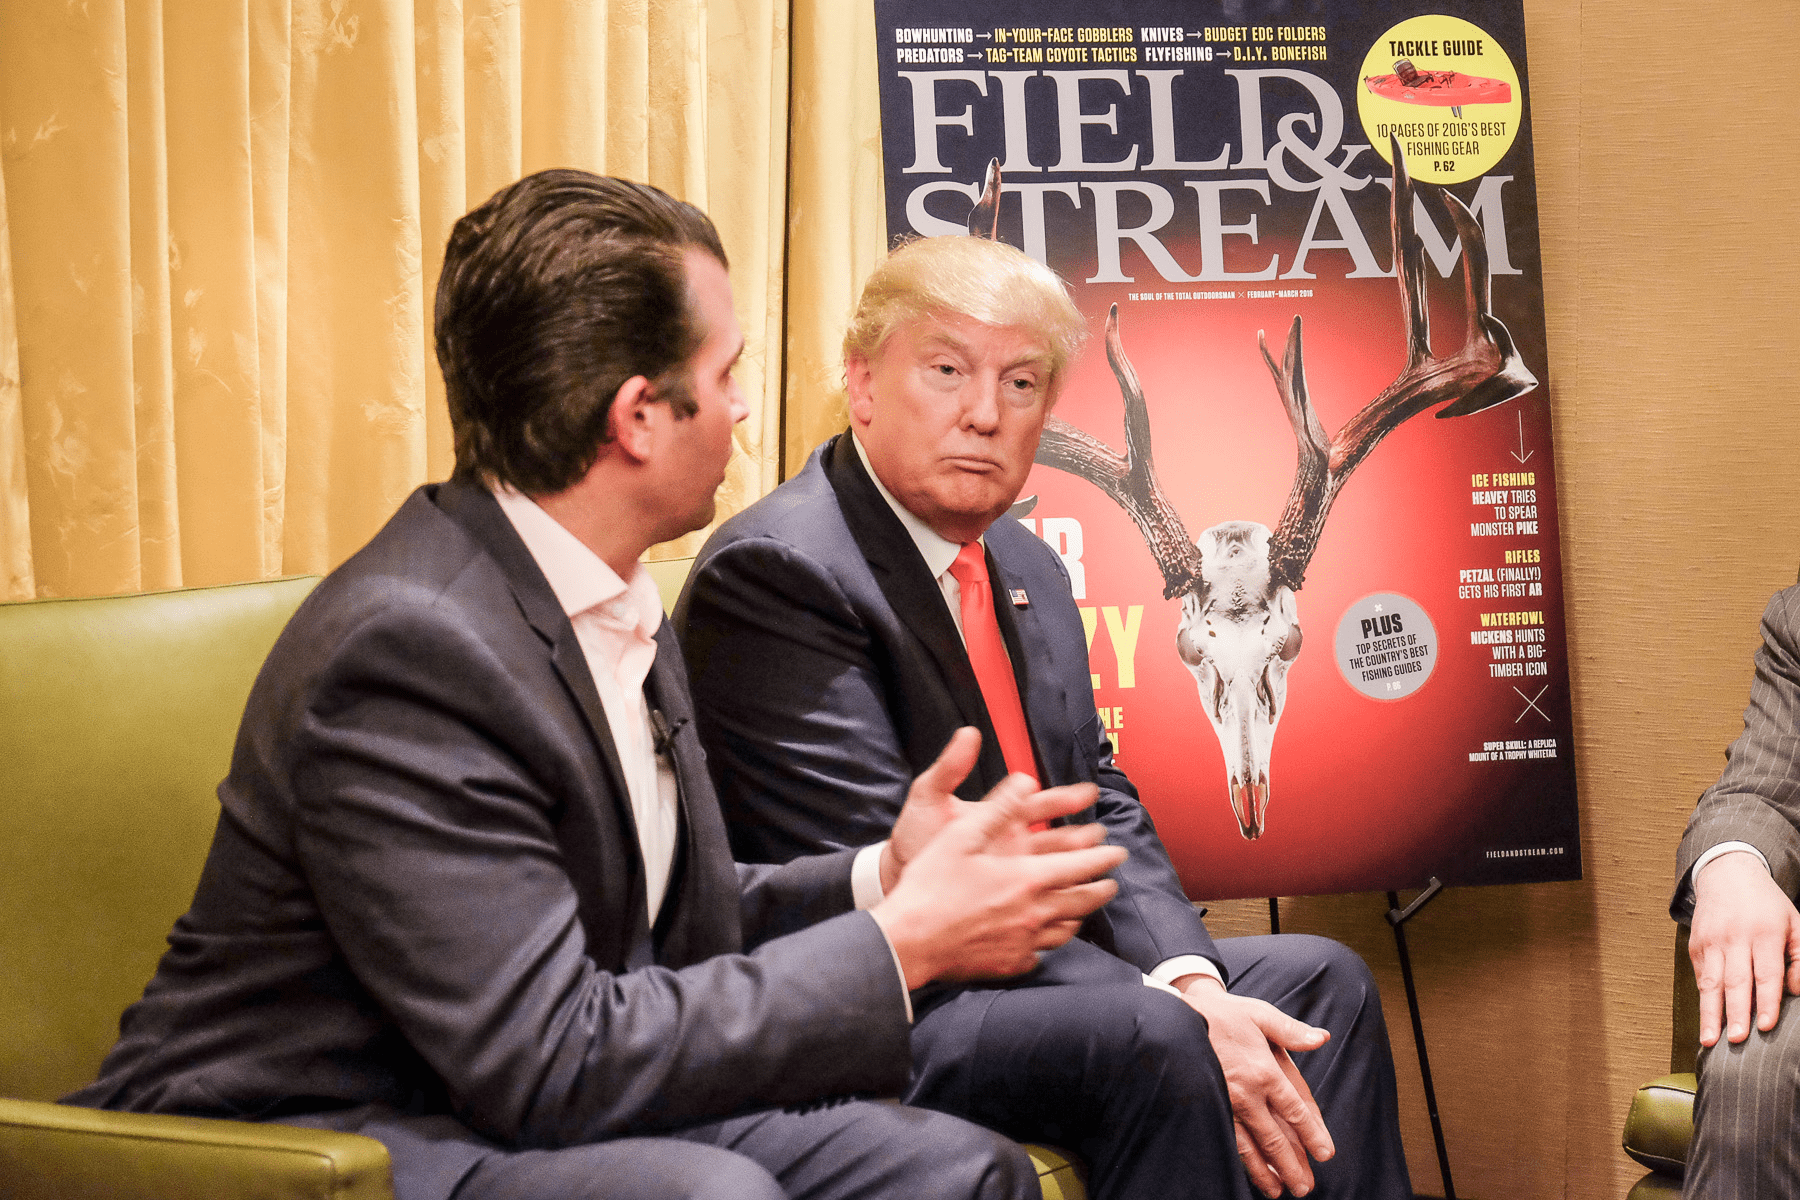 Donald Trump interview